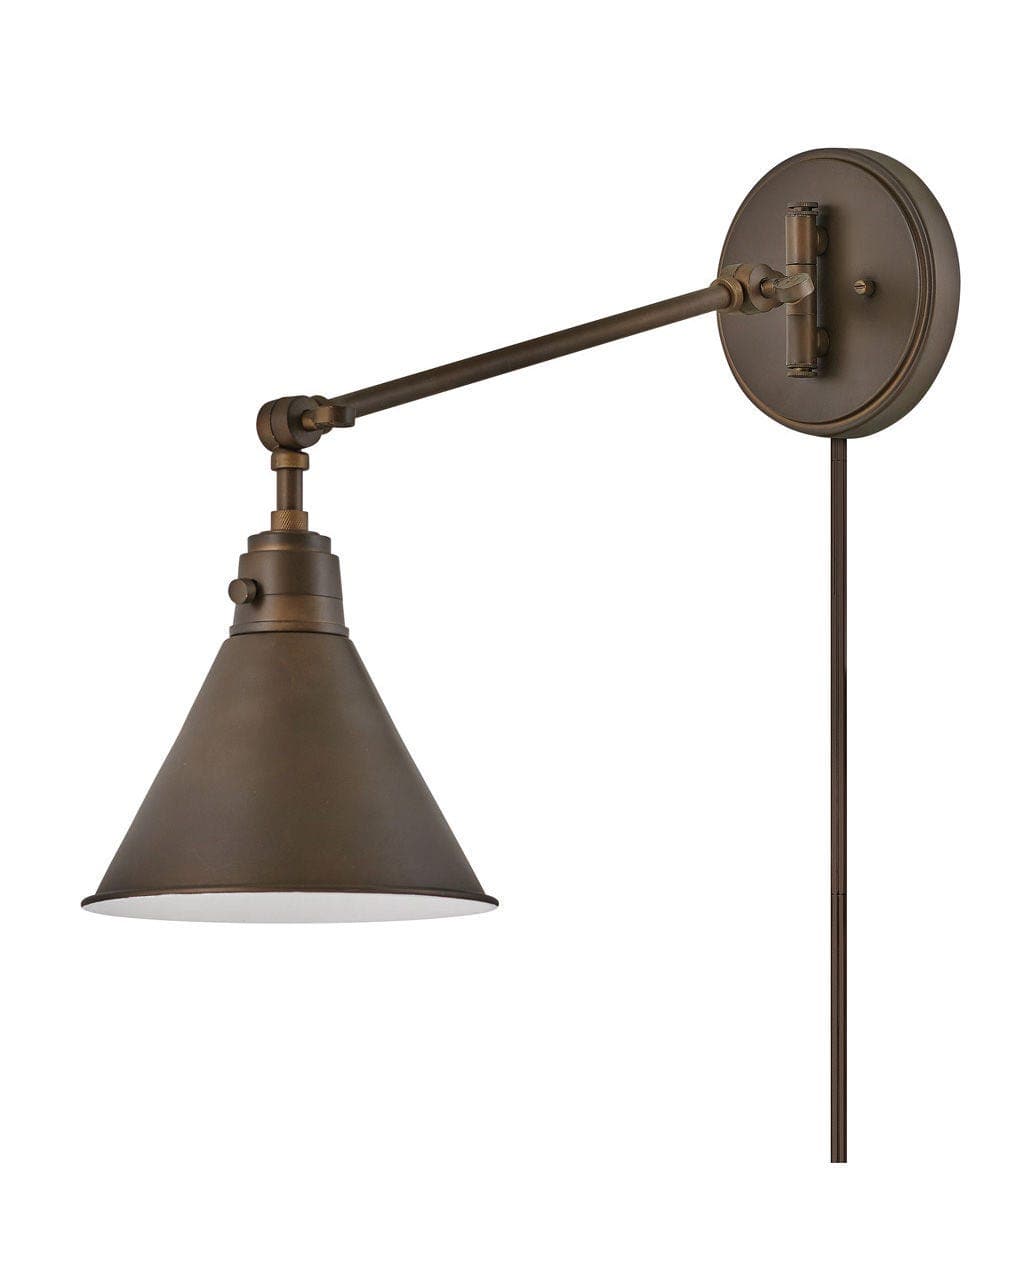 Arti Small Single Light Sconce-Hinkley Lighting-HINKLEY-3690OB-Wall SconcesNON-LED-Olde Bronze-5-France and Son